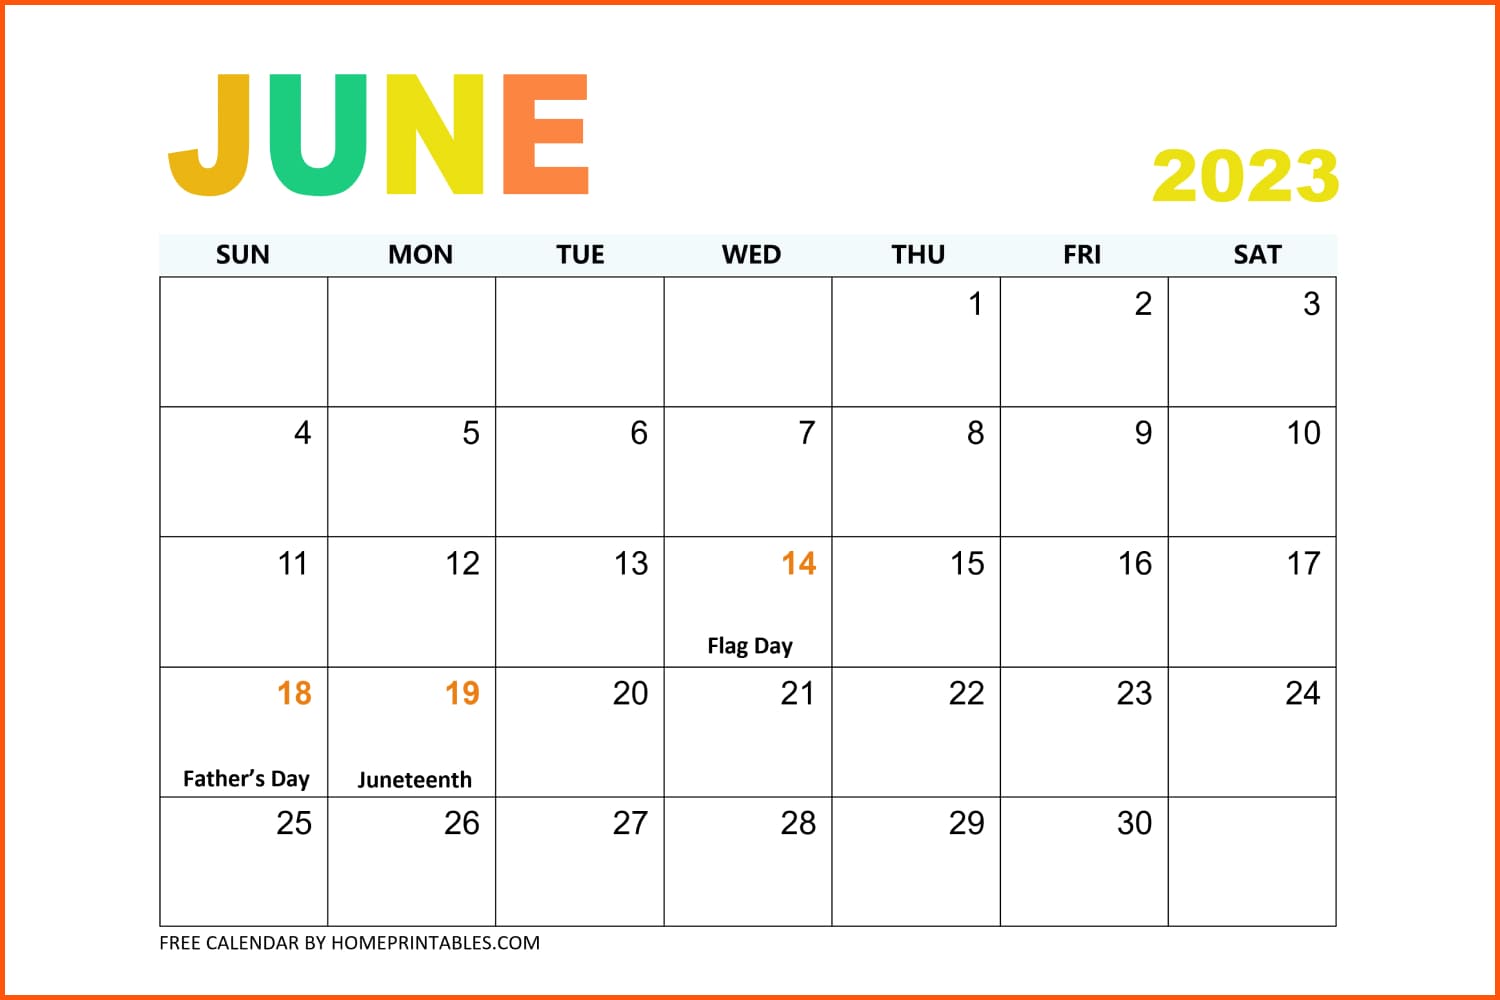 June calendar with holidays.